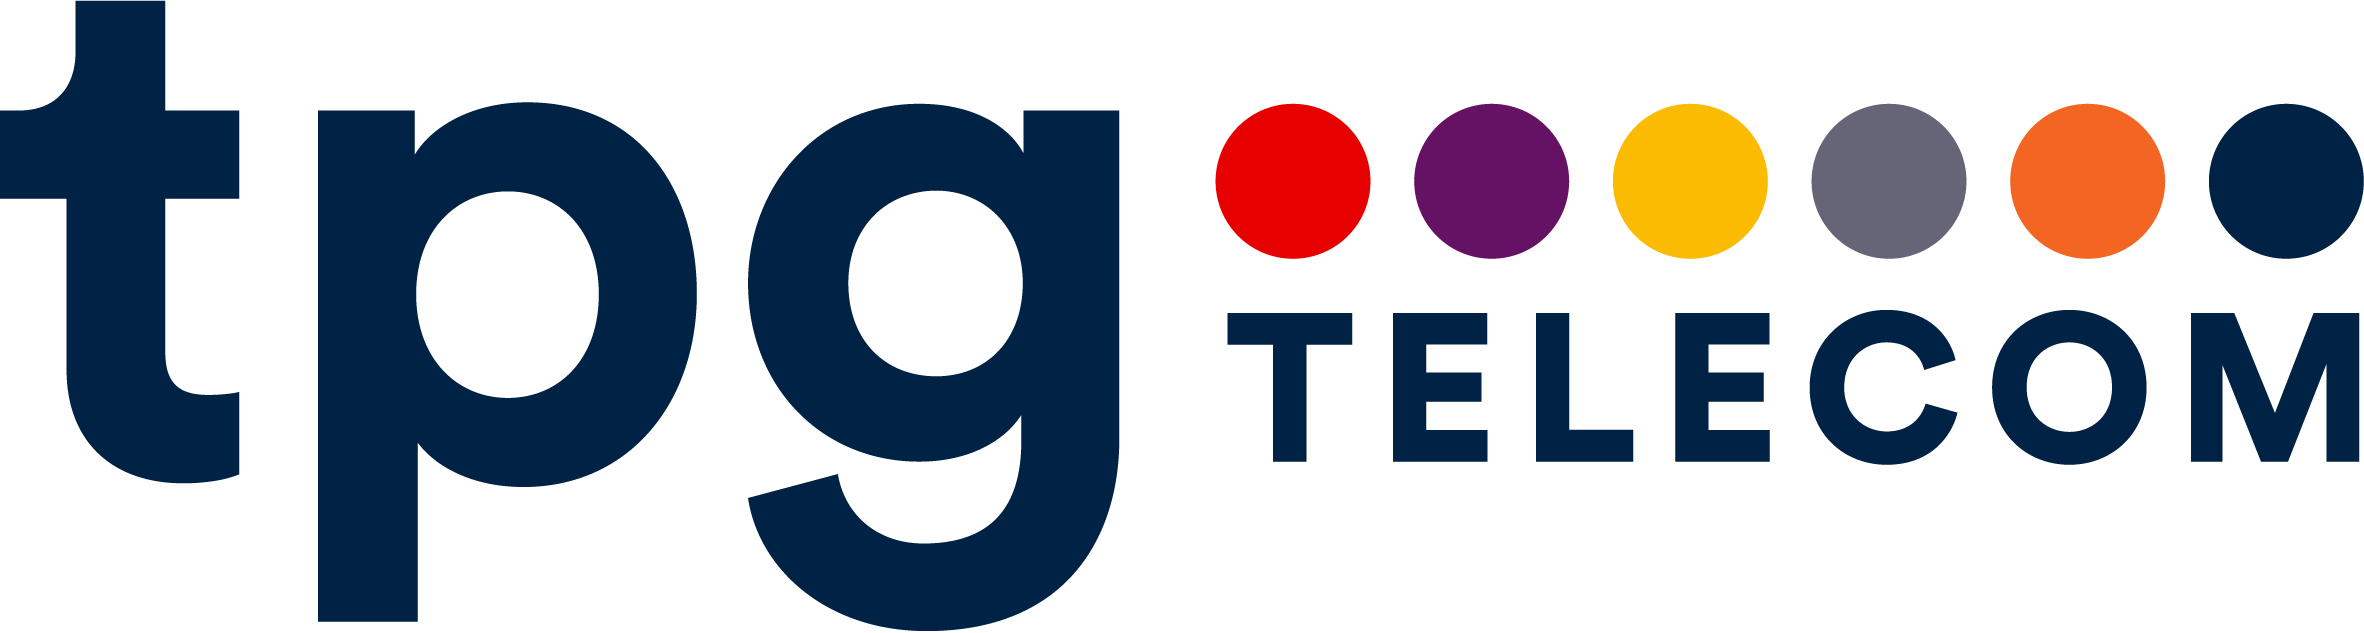 TPG_Telecom_Logo_RGB